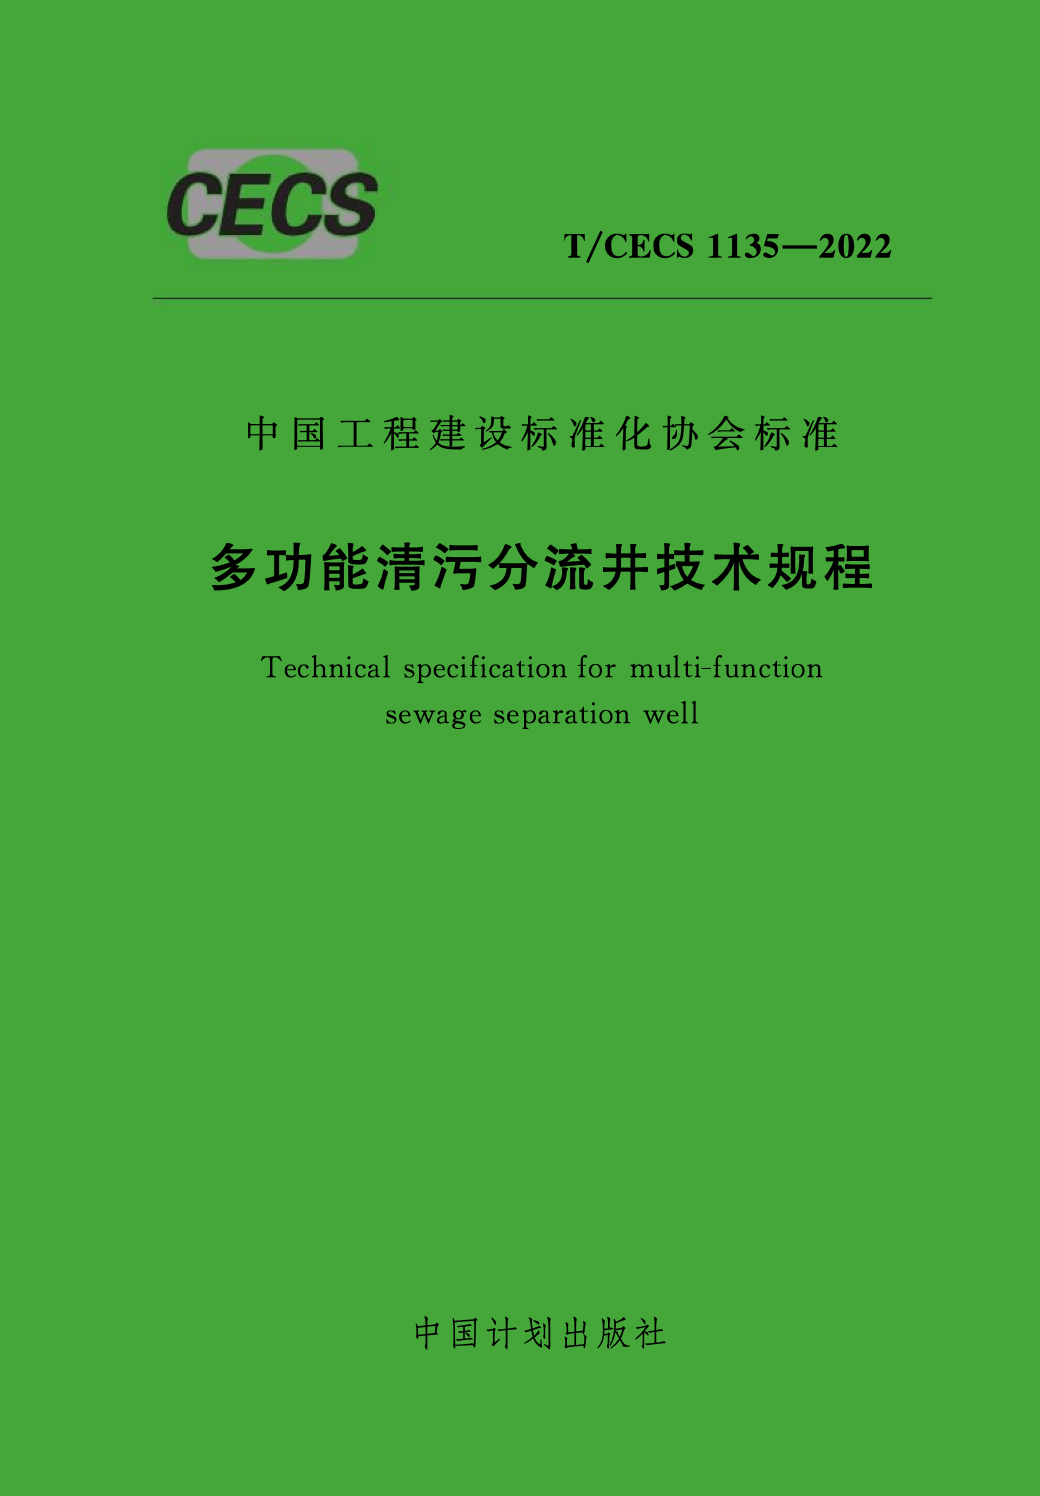 T/CECS 1135-2022 多功能清污分流井技术规程